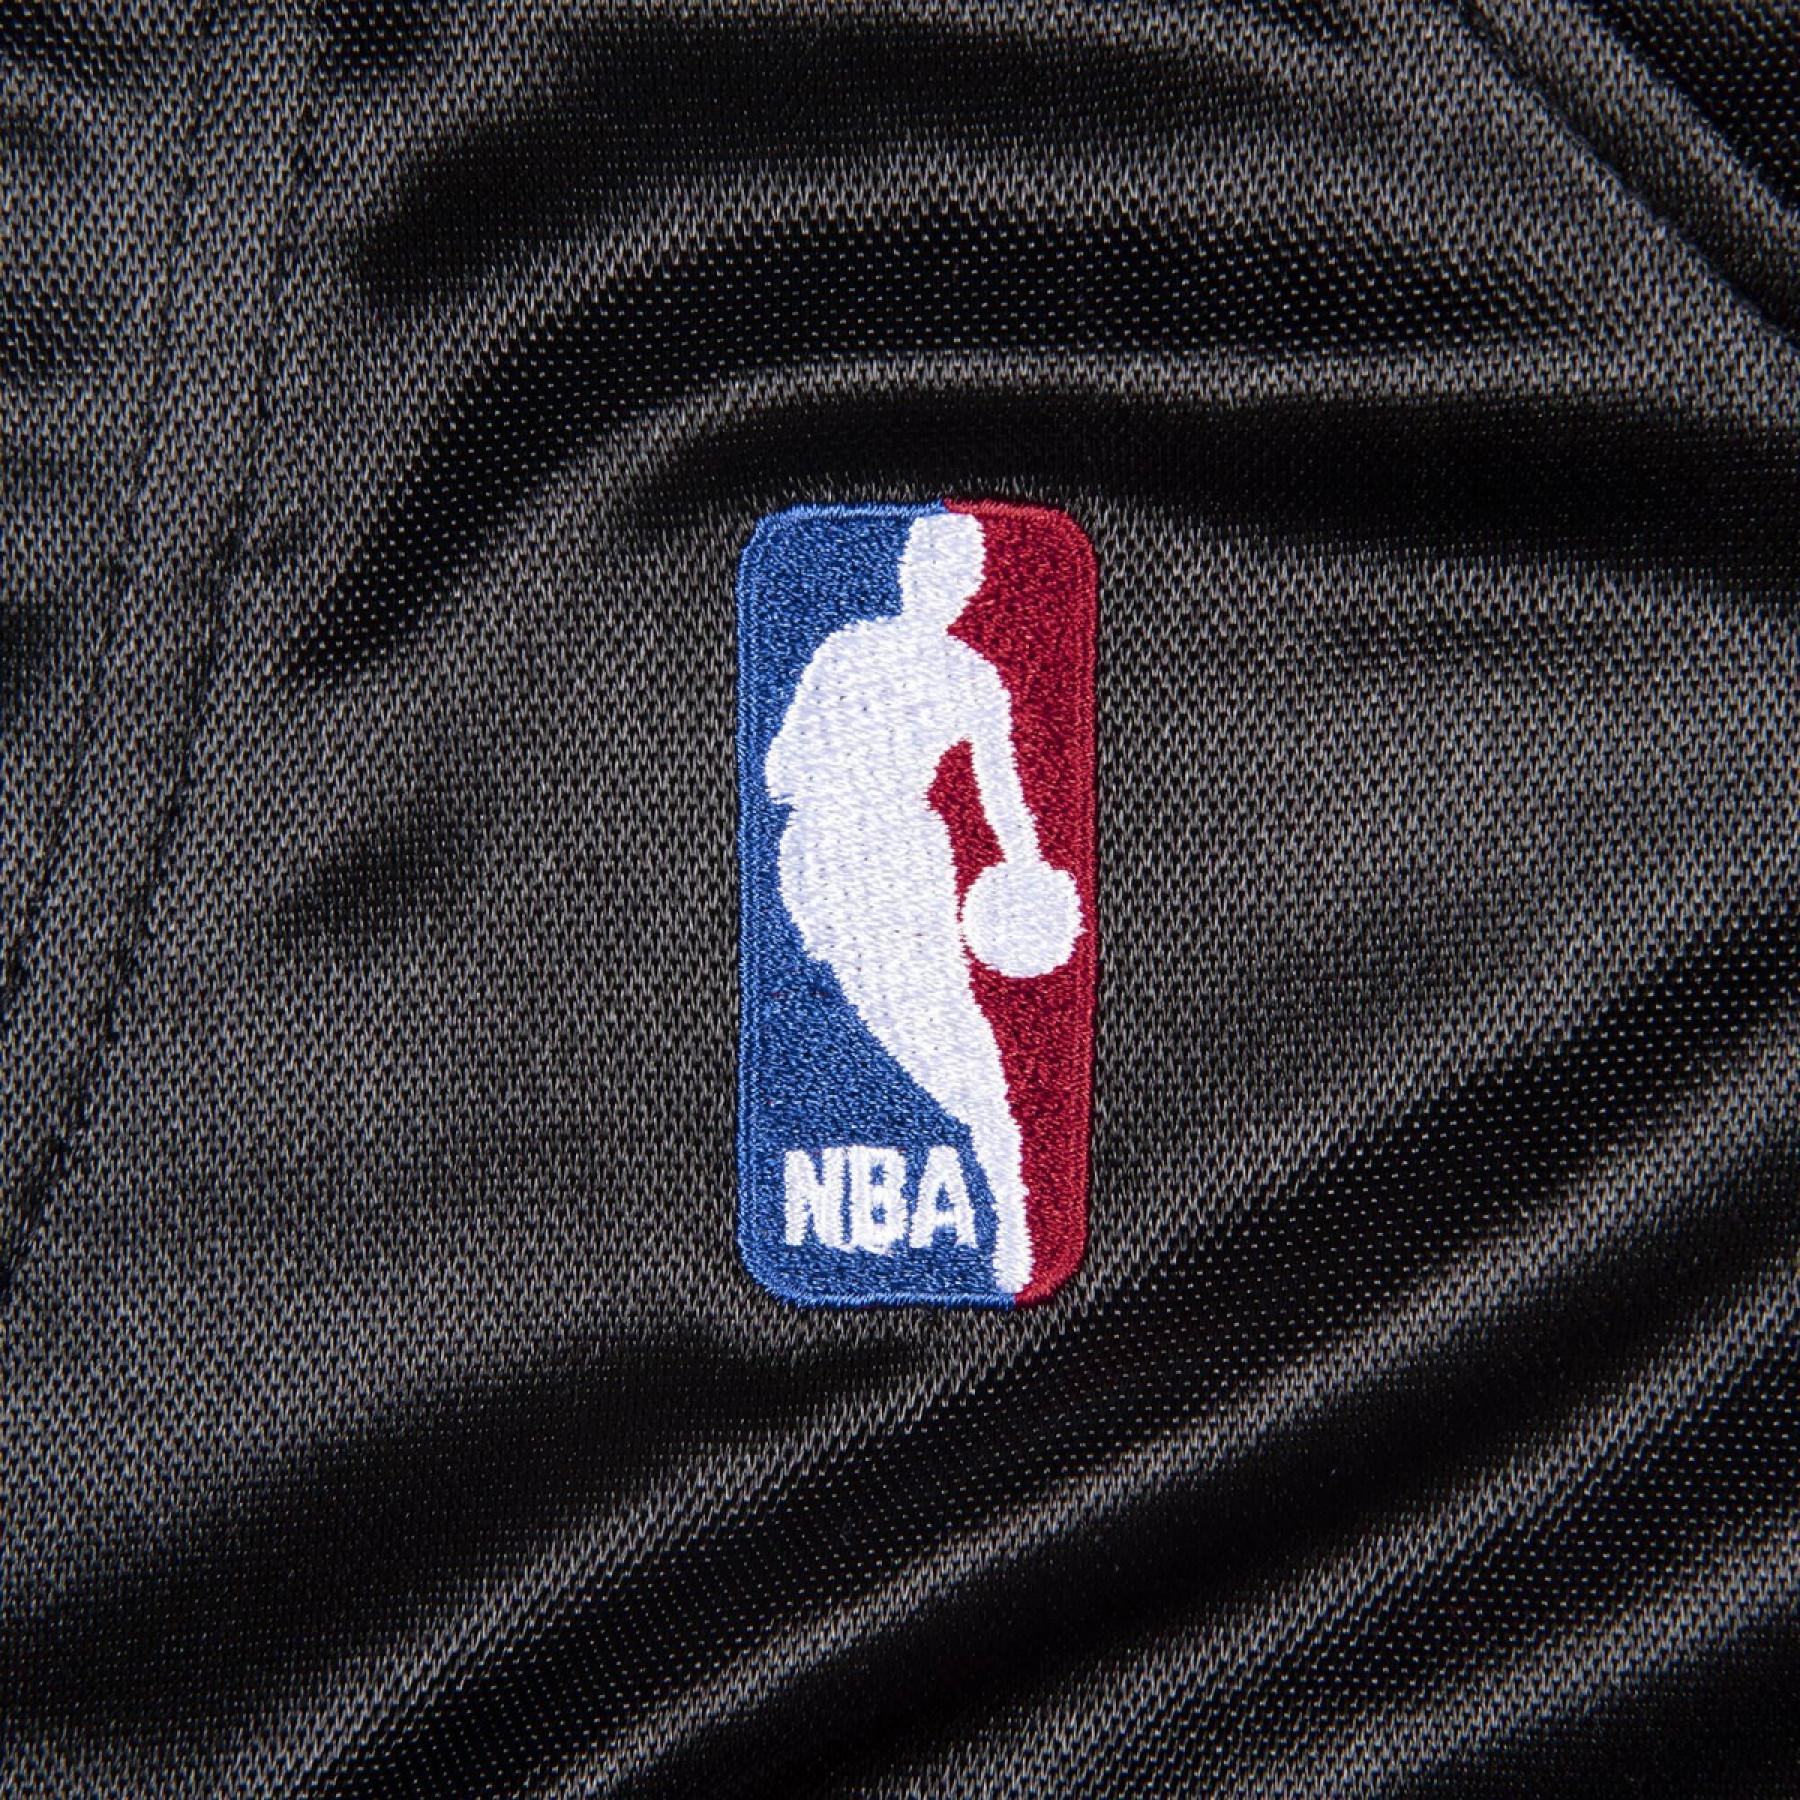 Autentyczna koszulka Miami Heats Shaquille O'Neal 2005/06